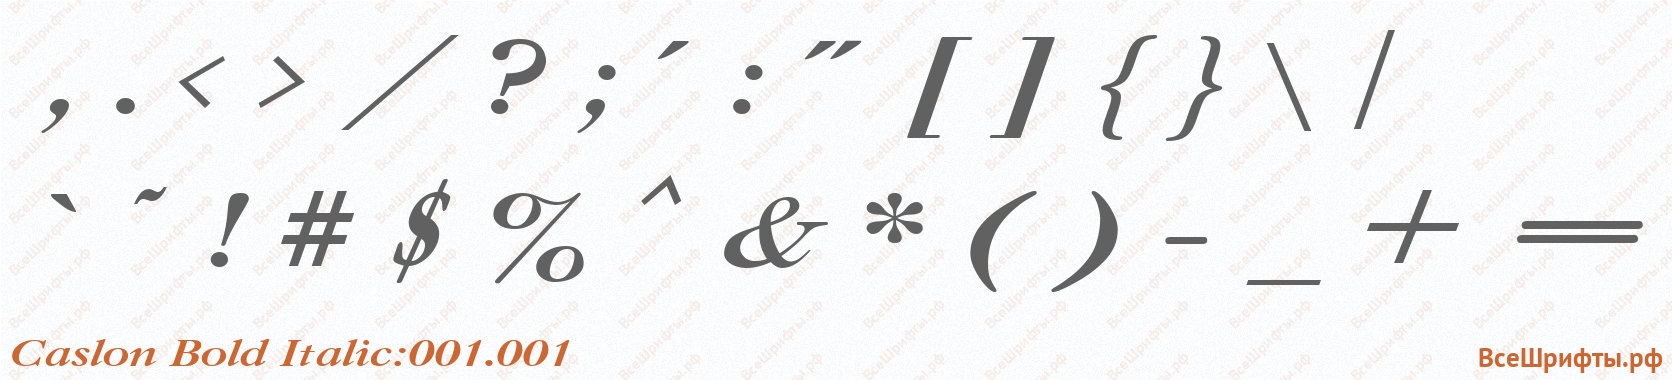 Шрифт Caslon Bold Italic:001.001 со знаками препинания и пунктуации